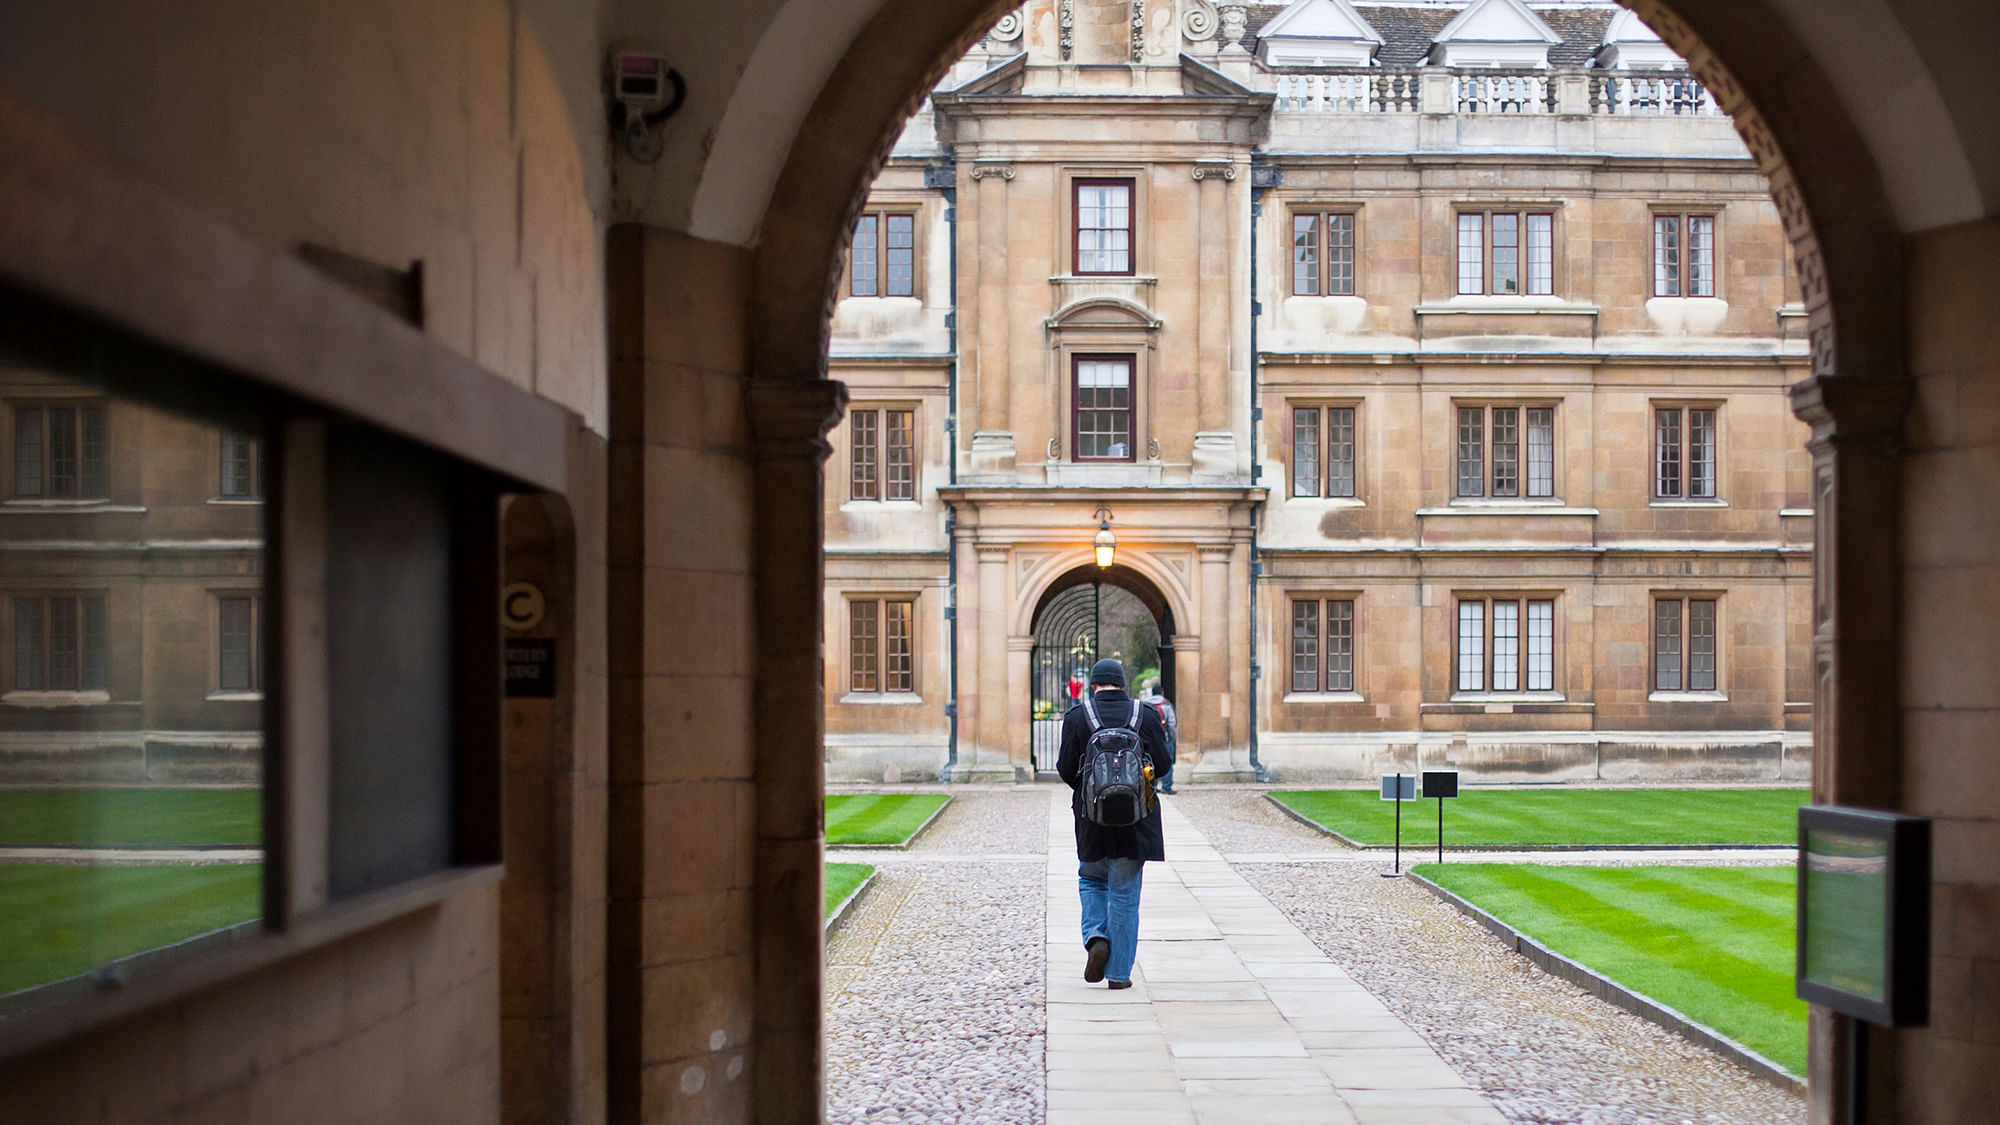 The walk till the main hall of Cambridge University might not be as rosy. (Photo: iStock)